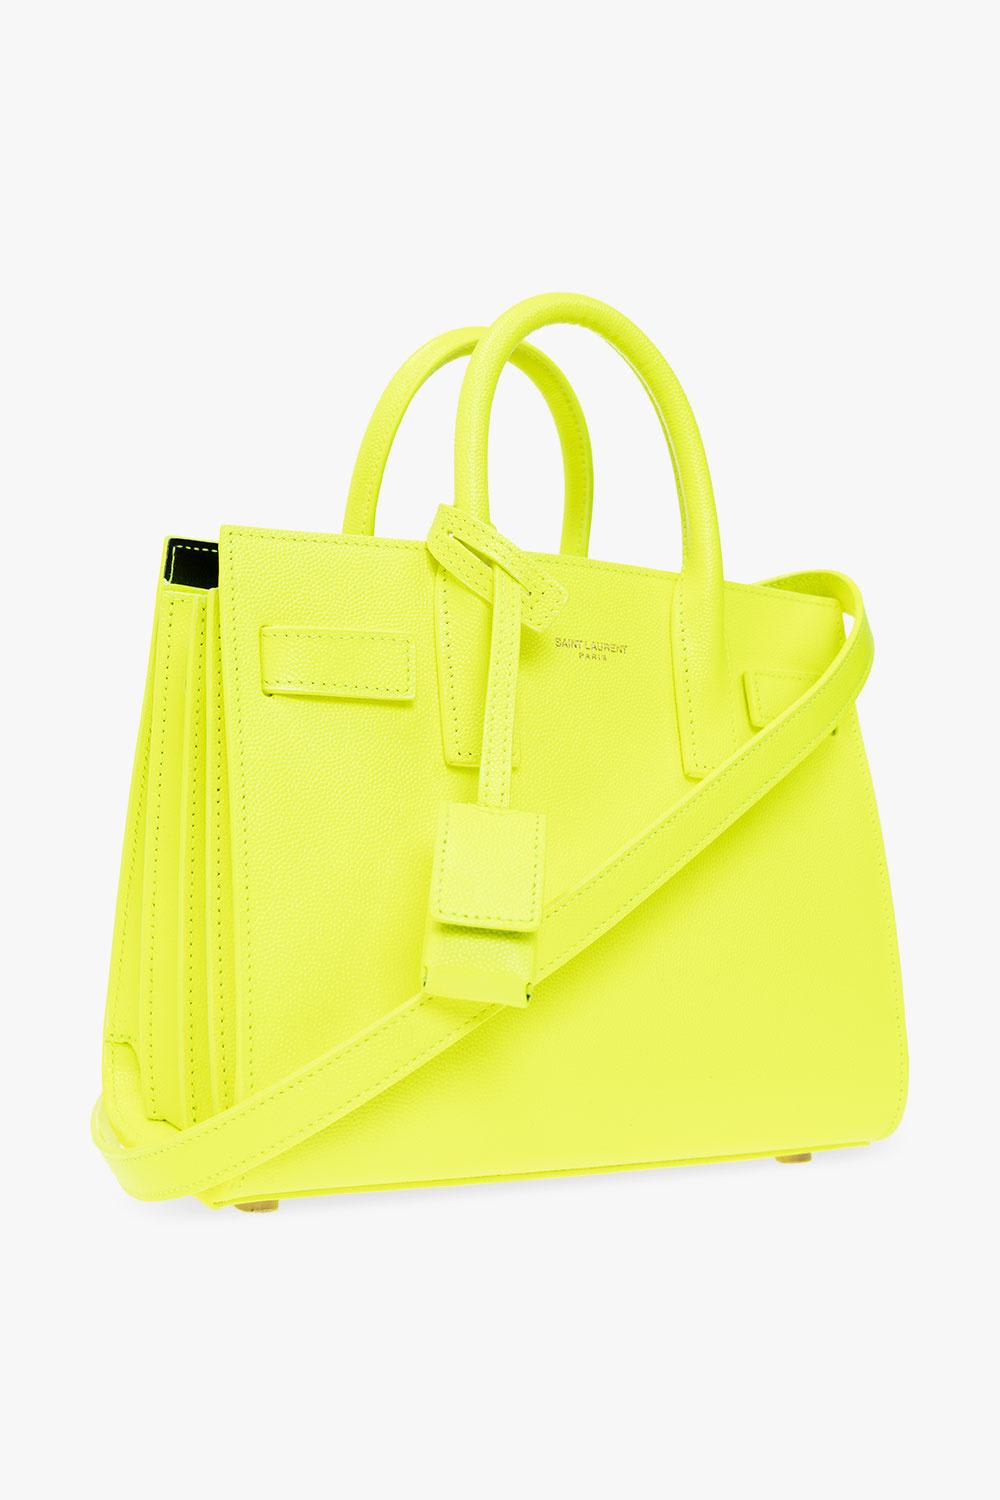 Saint Laurent Yellow Handbags